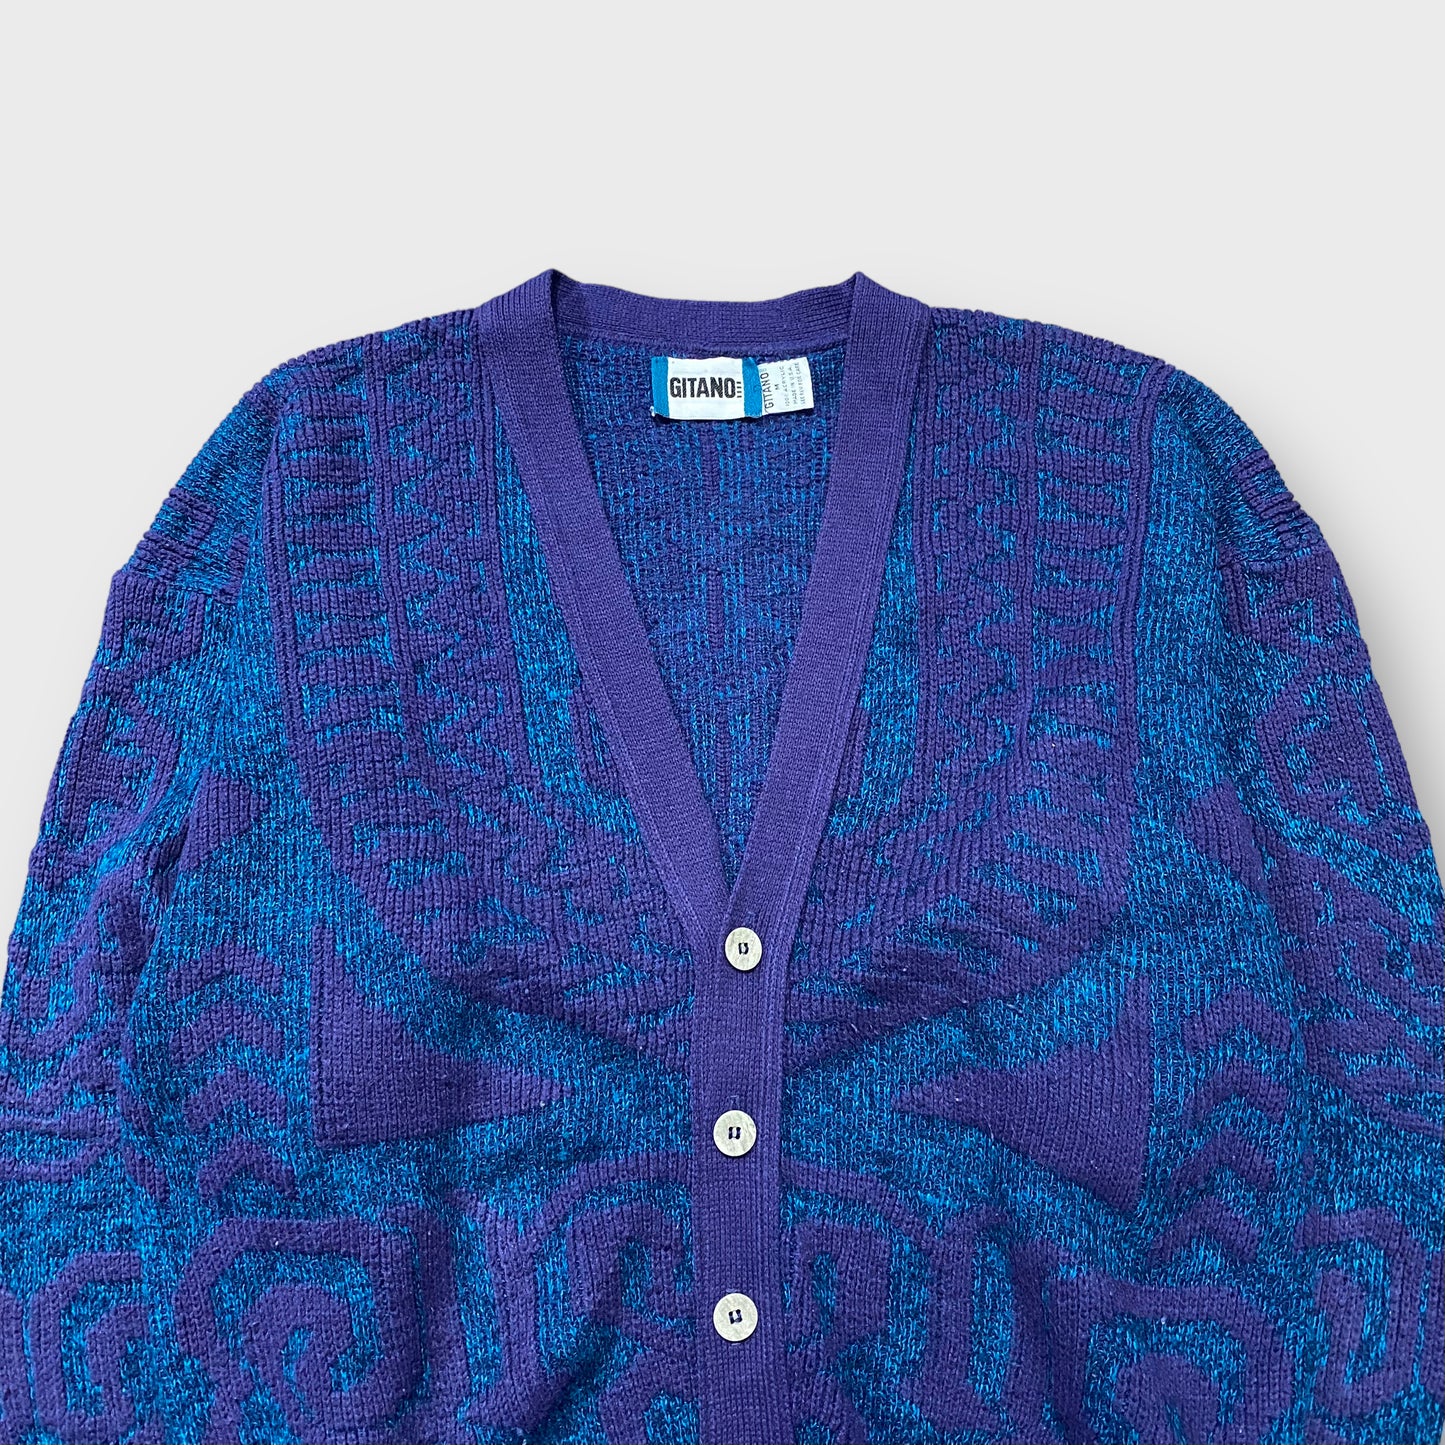 Pattern knit cardigan